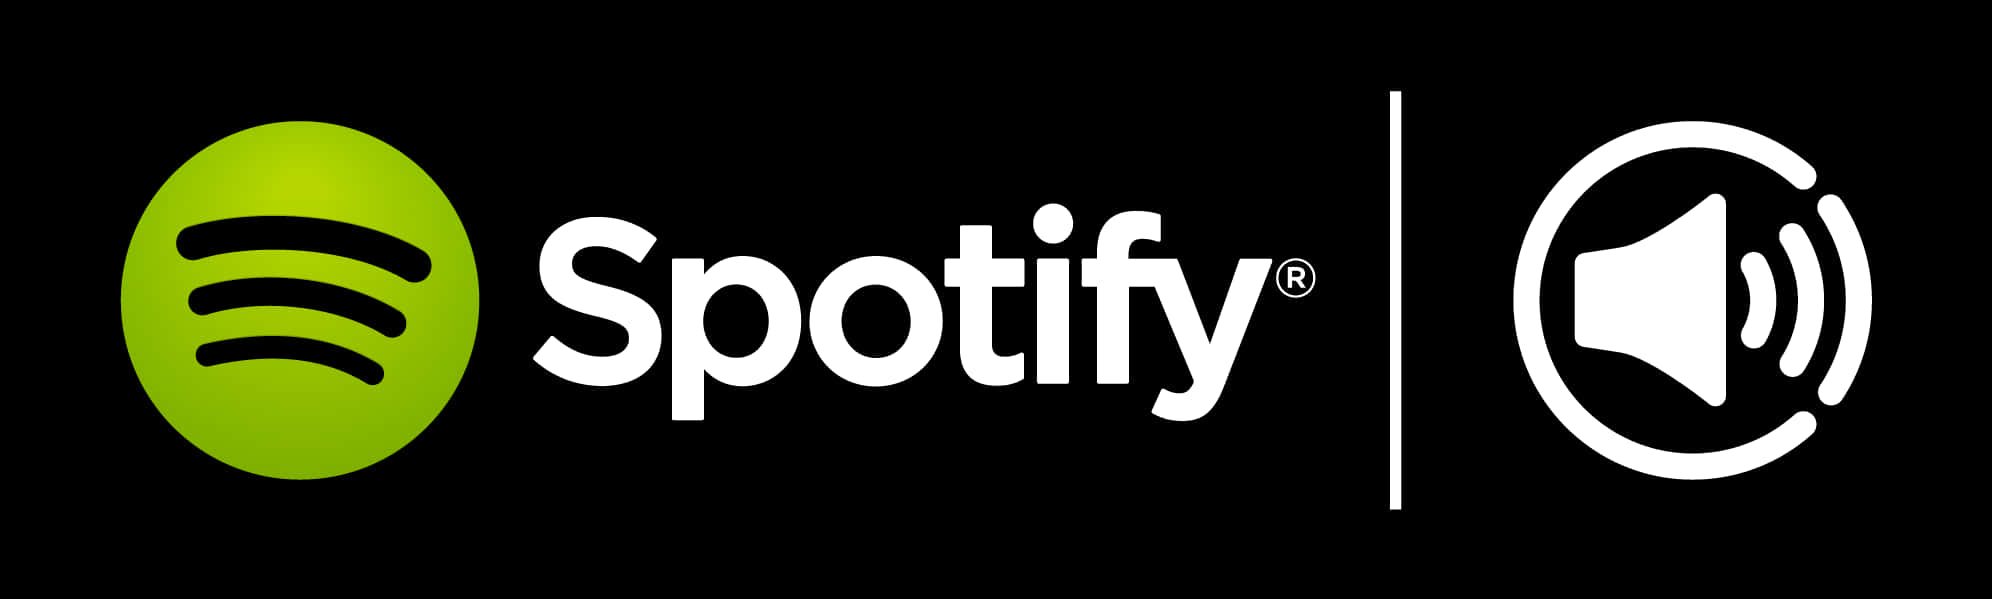 Spotify Logoand Symbols